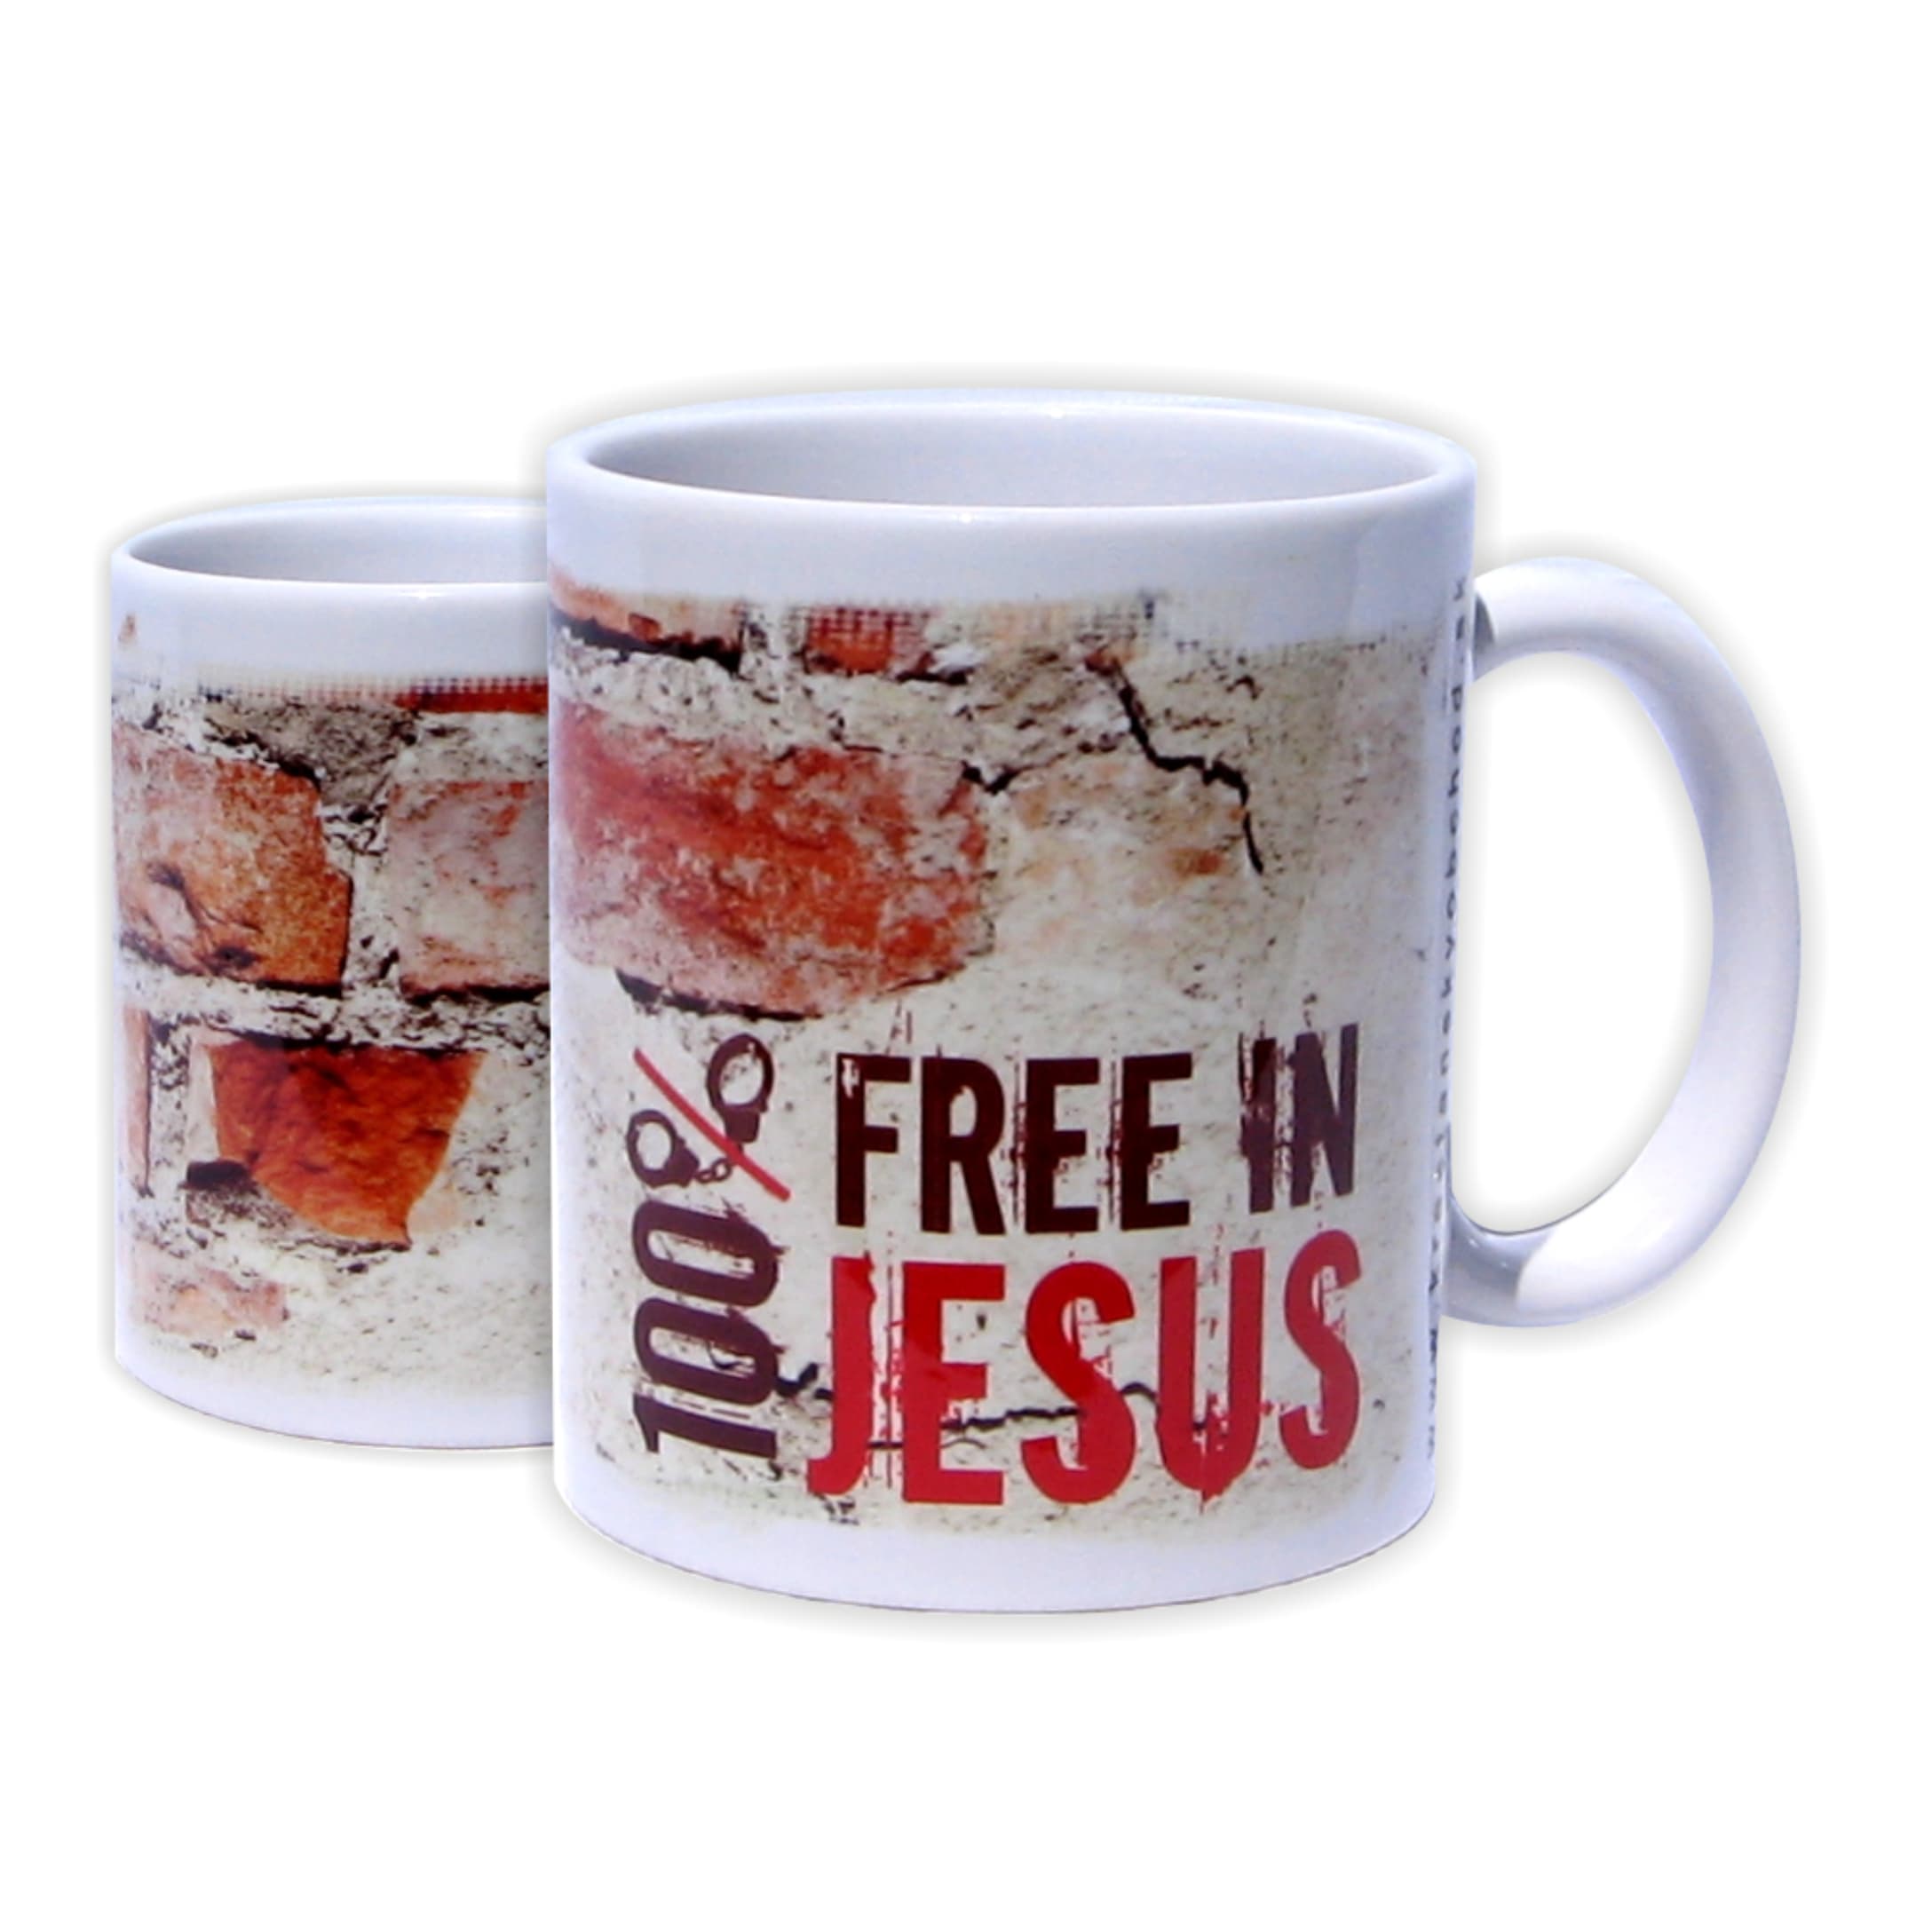 Kresťanský hrnček - Hrnček 100% free in Jesus